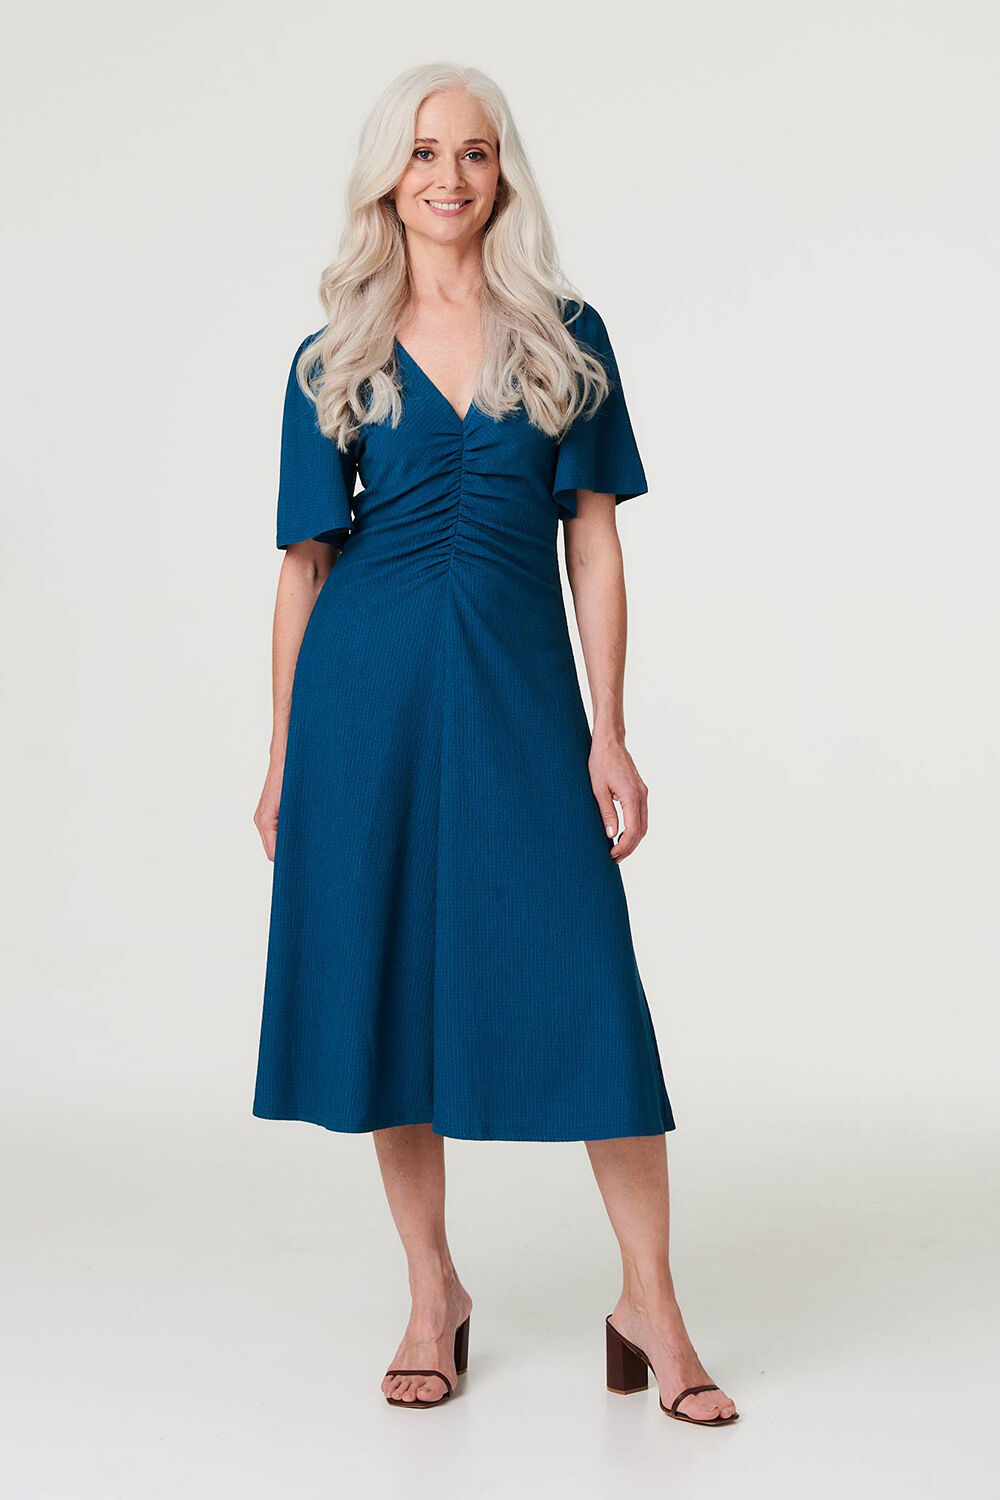 Izabel London Blue - Plain Ruched Front Midi Dress, Size: 14